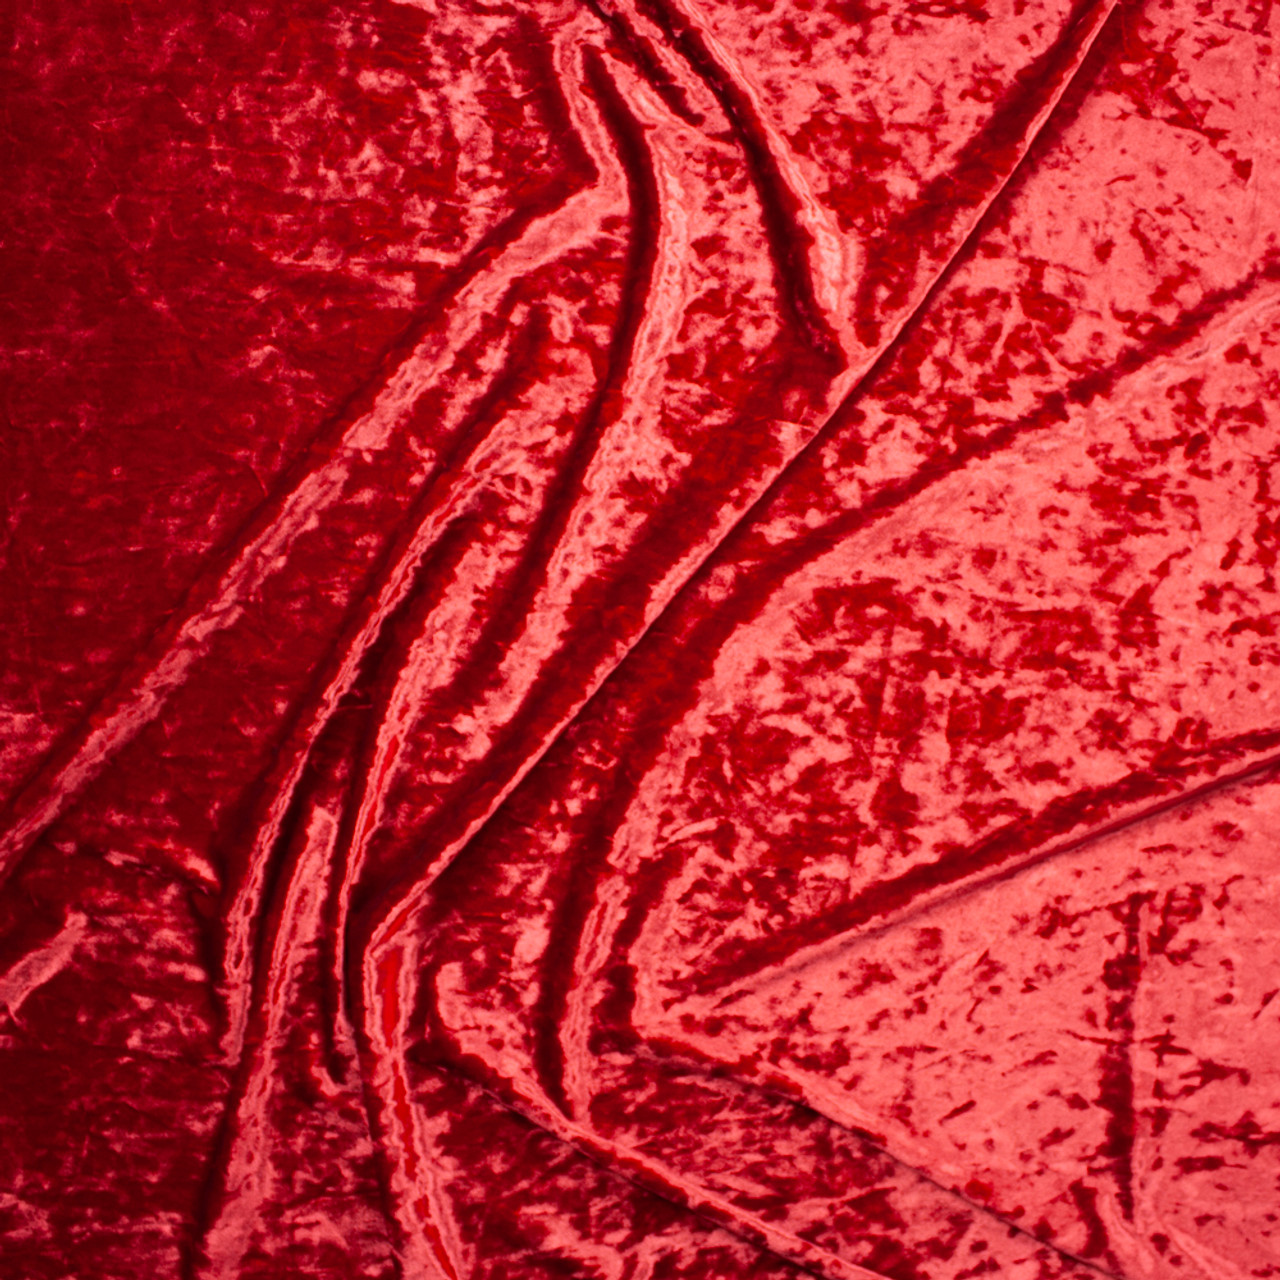 red velvet fabric texture